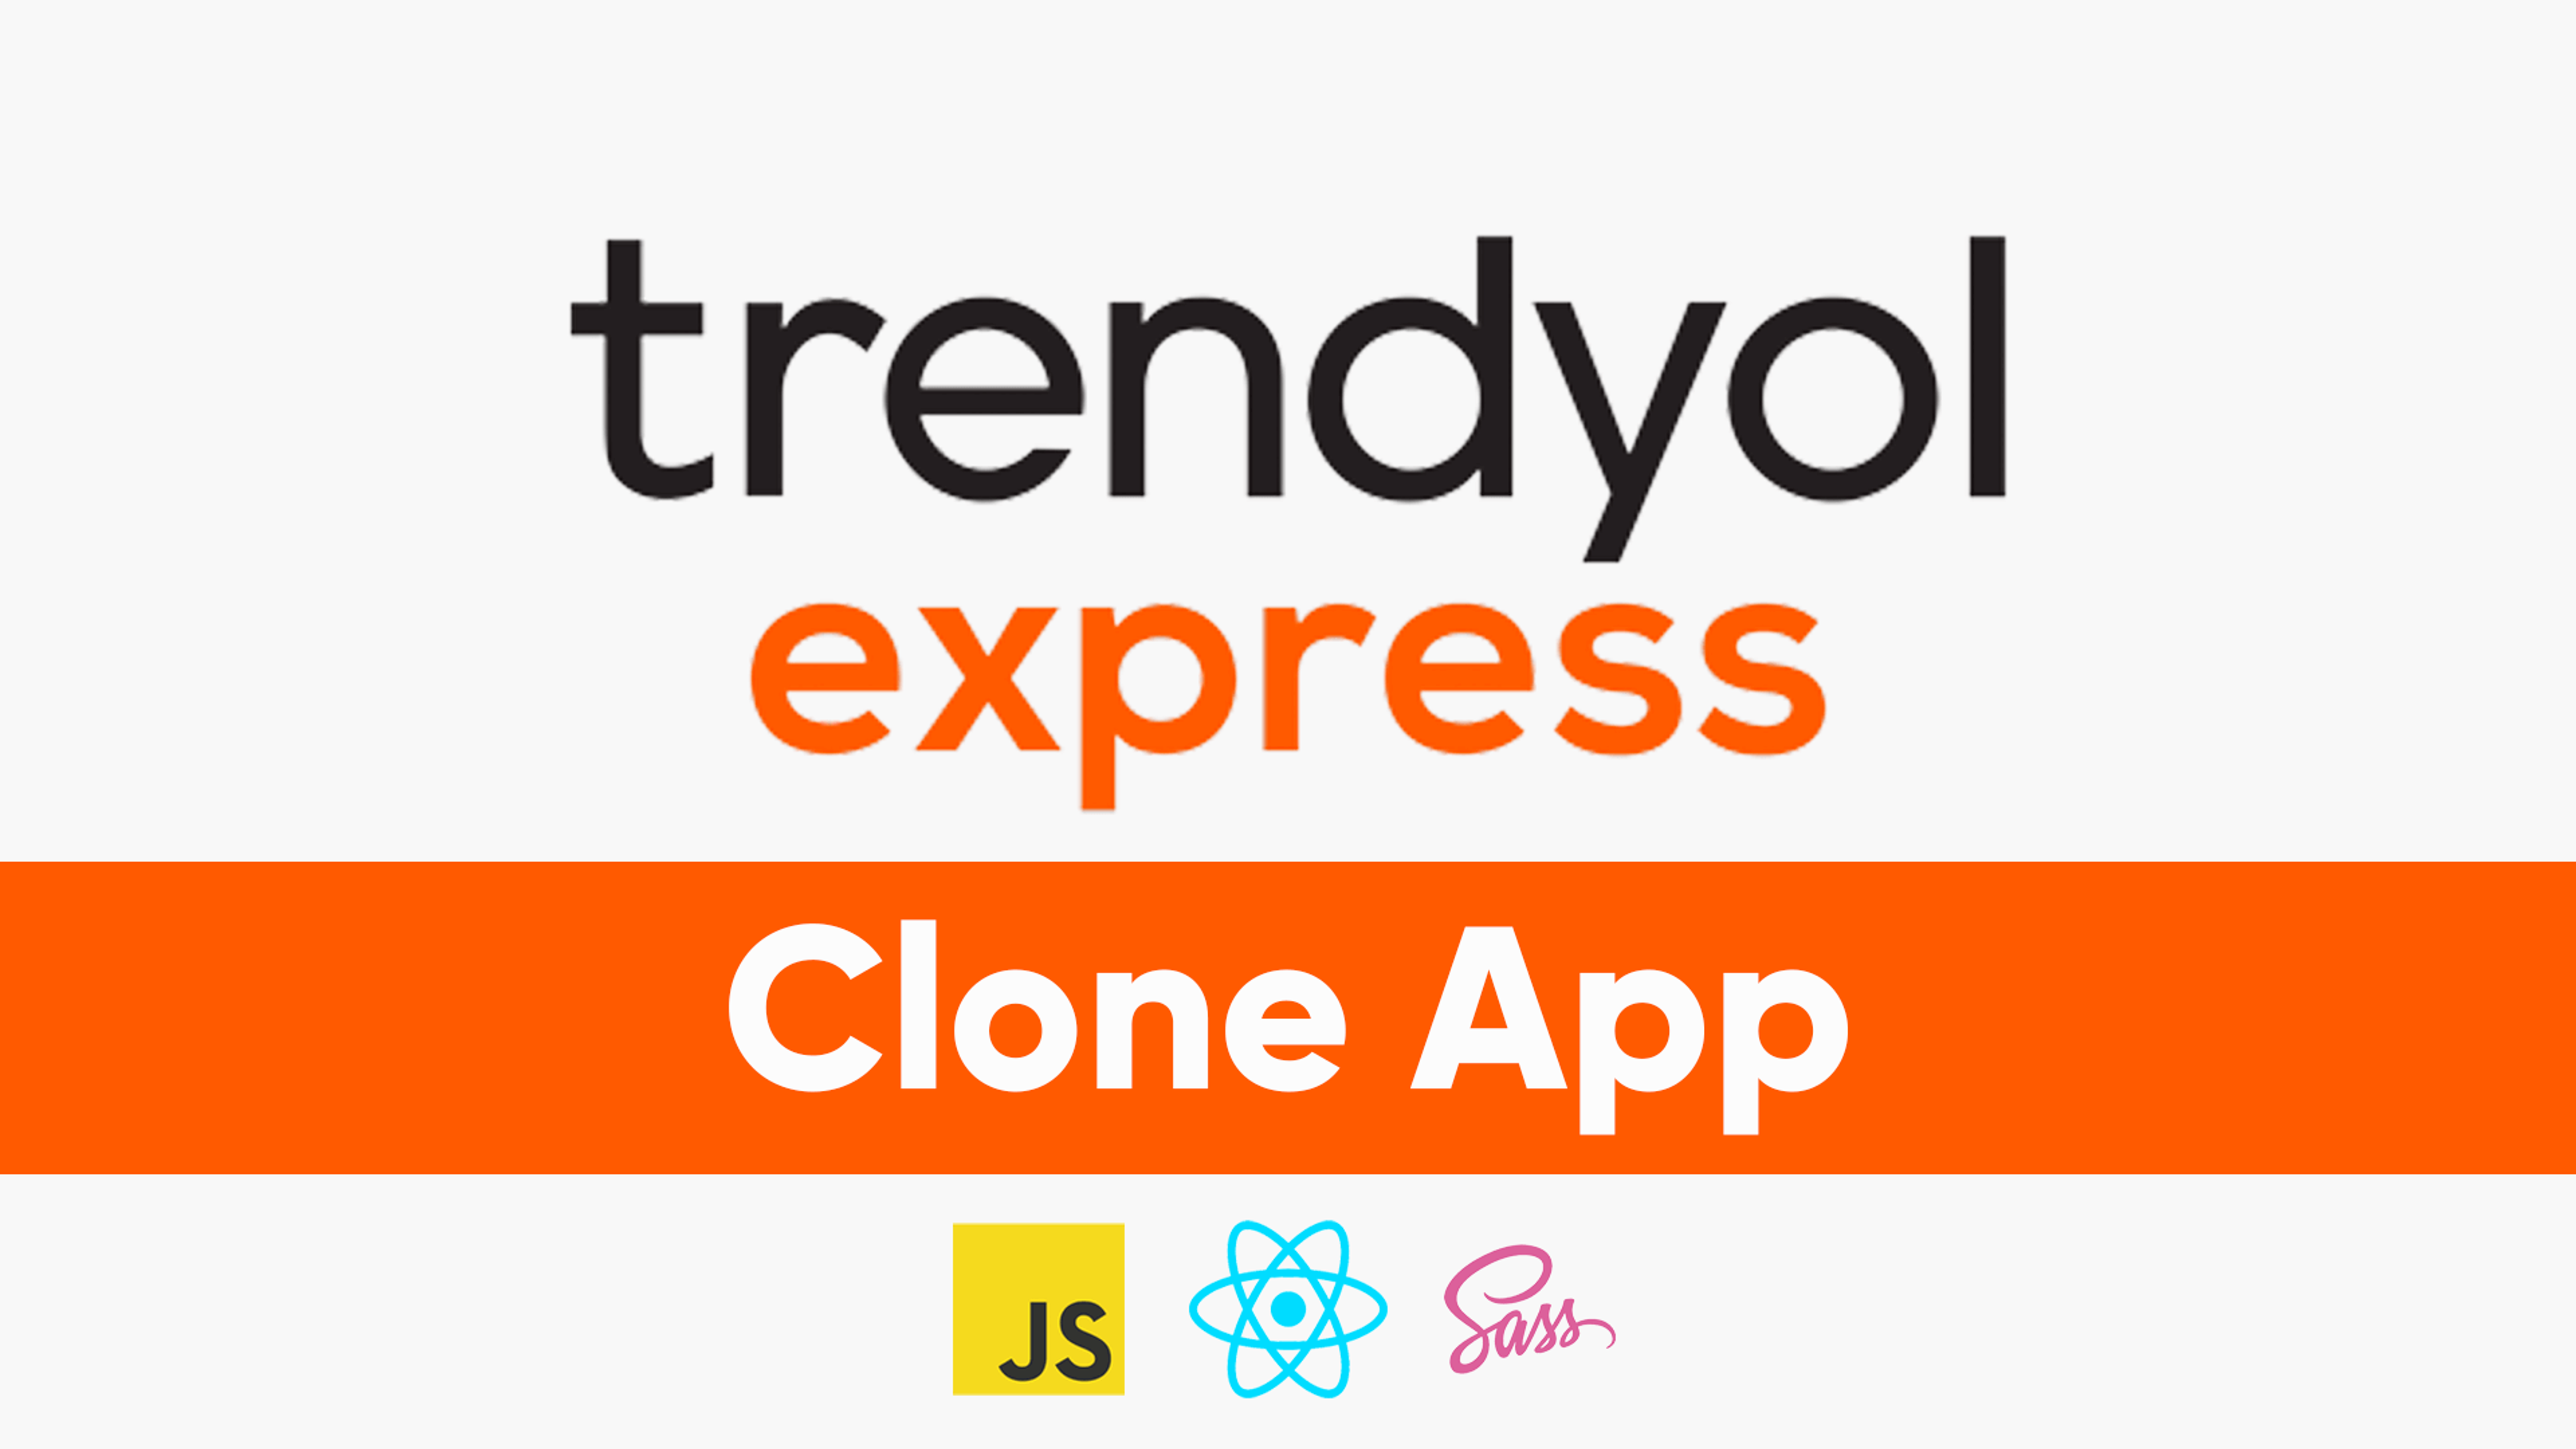 Trendyol Express Clone App